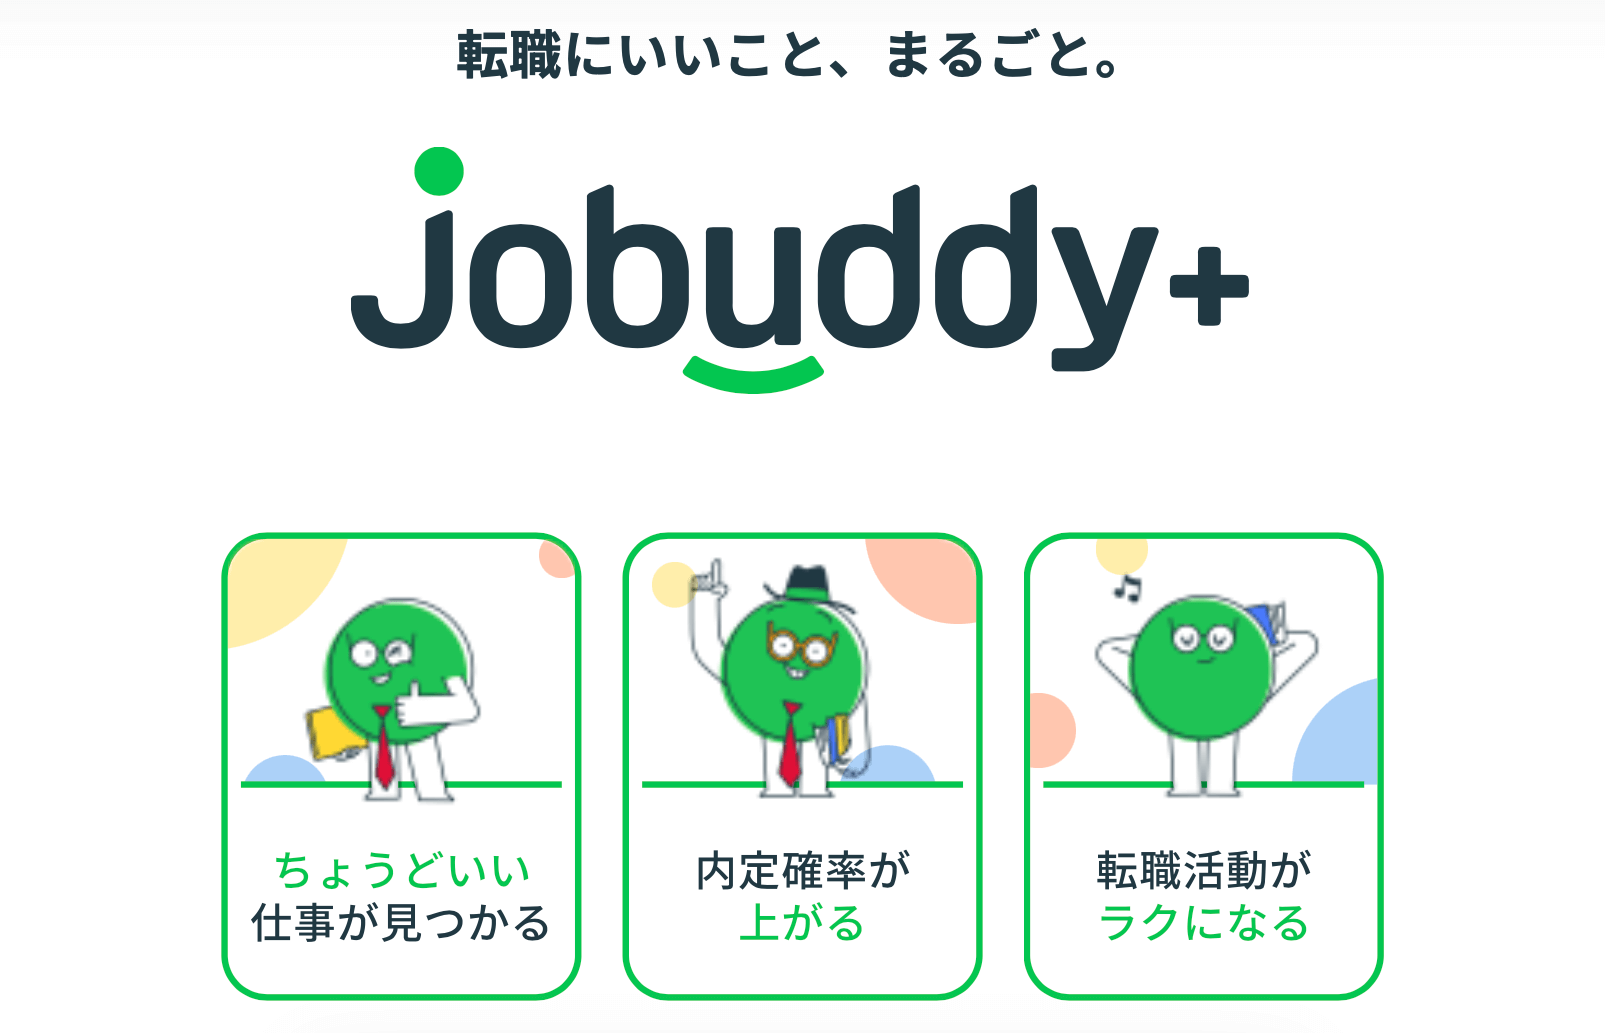 jobuddy